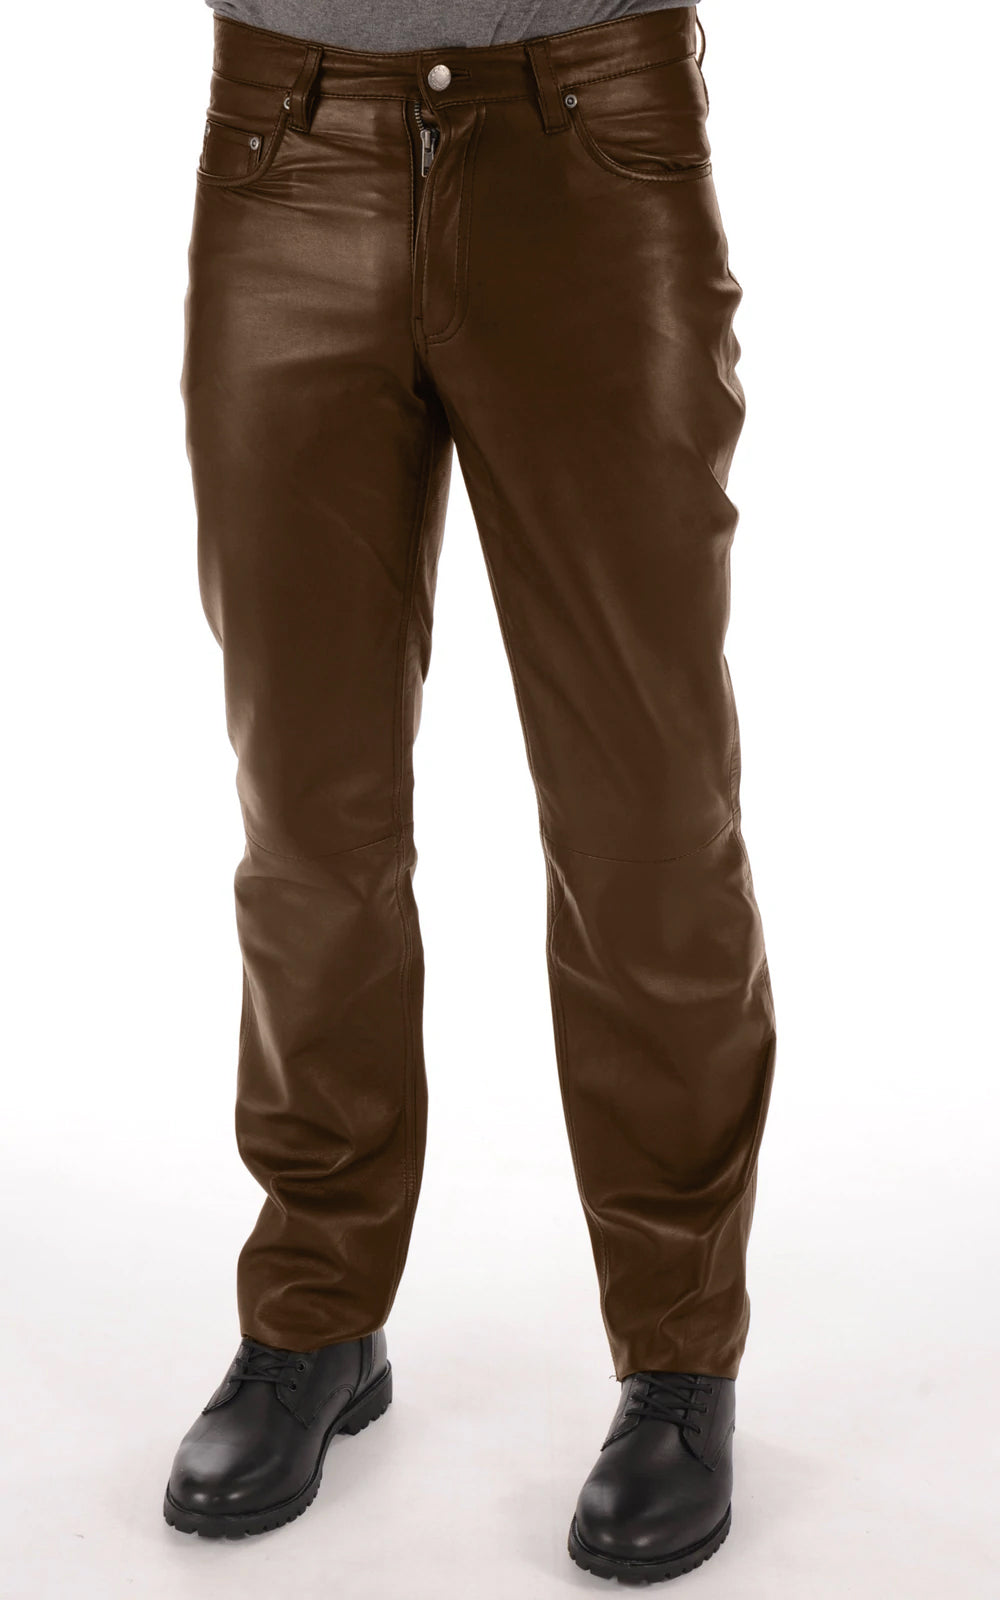 Black Duchamp Leather Pants by FREI-MUT on Sale